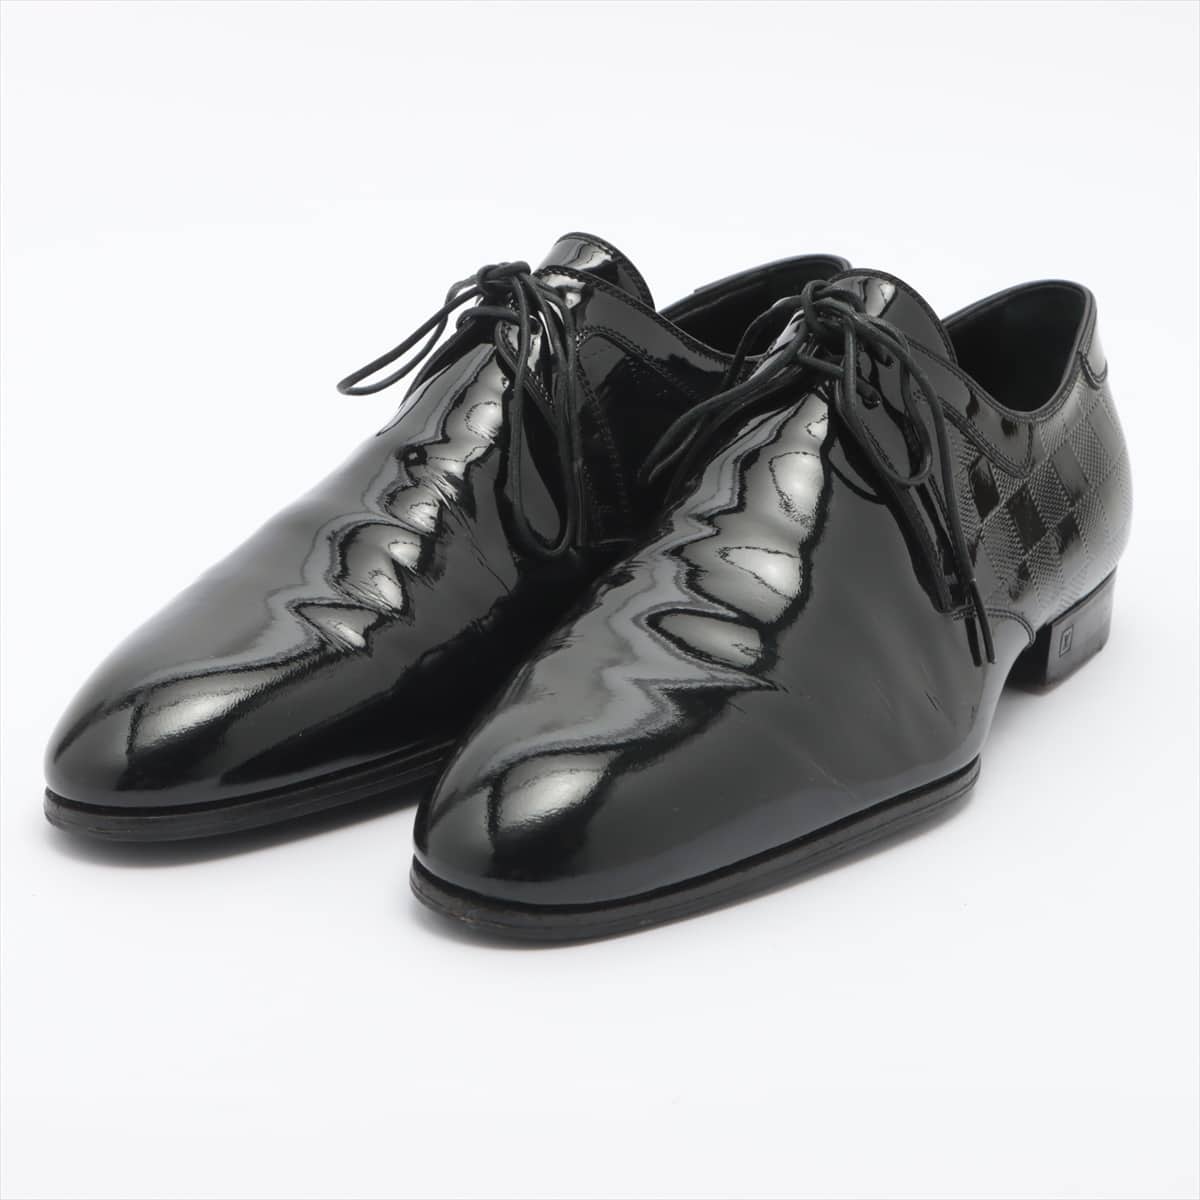 Louis Vuitton 10 years Patent leather Leather shoes 6M Men's Black ST0150 Damier